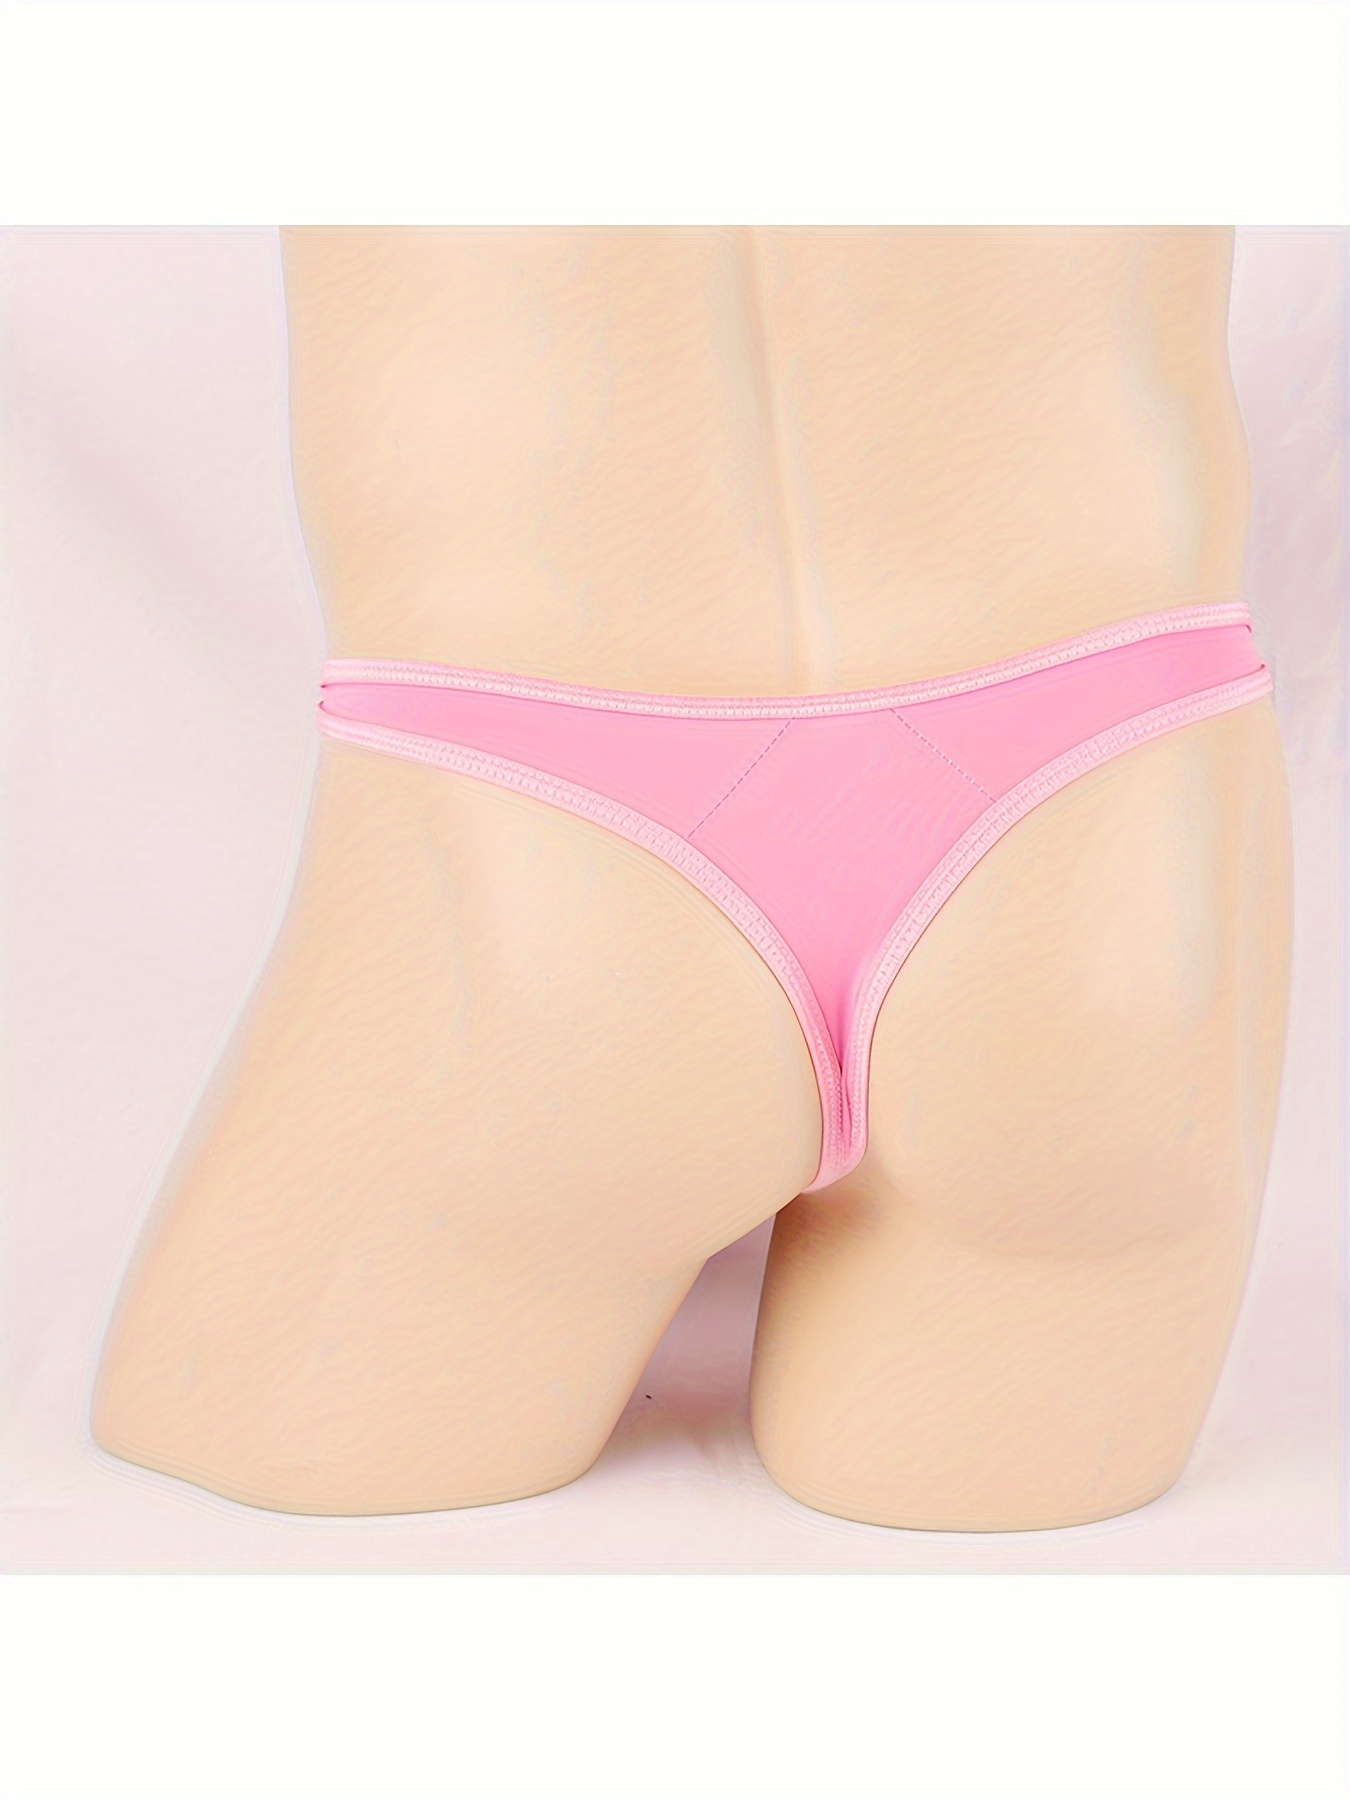 Transparent Panties Underwear Silk Briefs T back Sexy G-string Lingerie  Thongs 